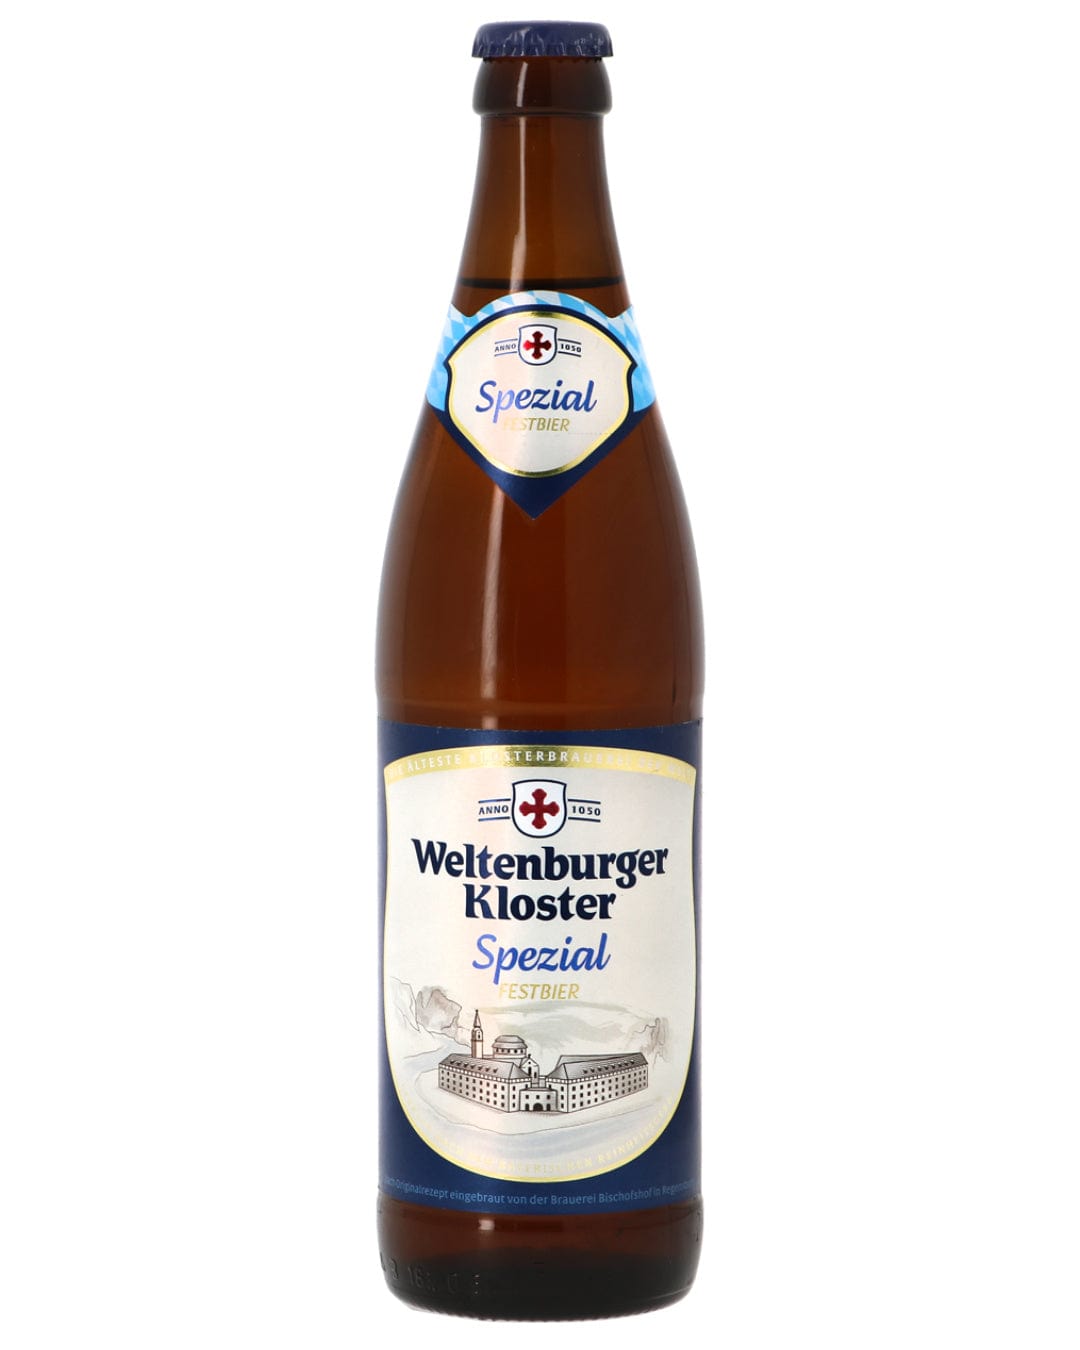 Weltenburger Kloster Spezial Festbier Beer, 500 ml Beer